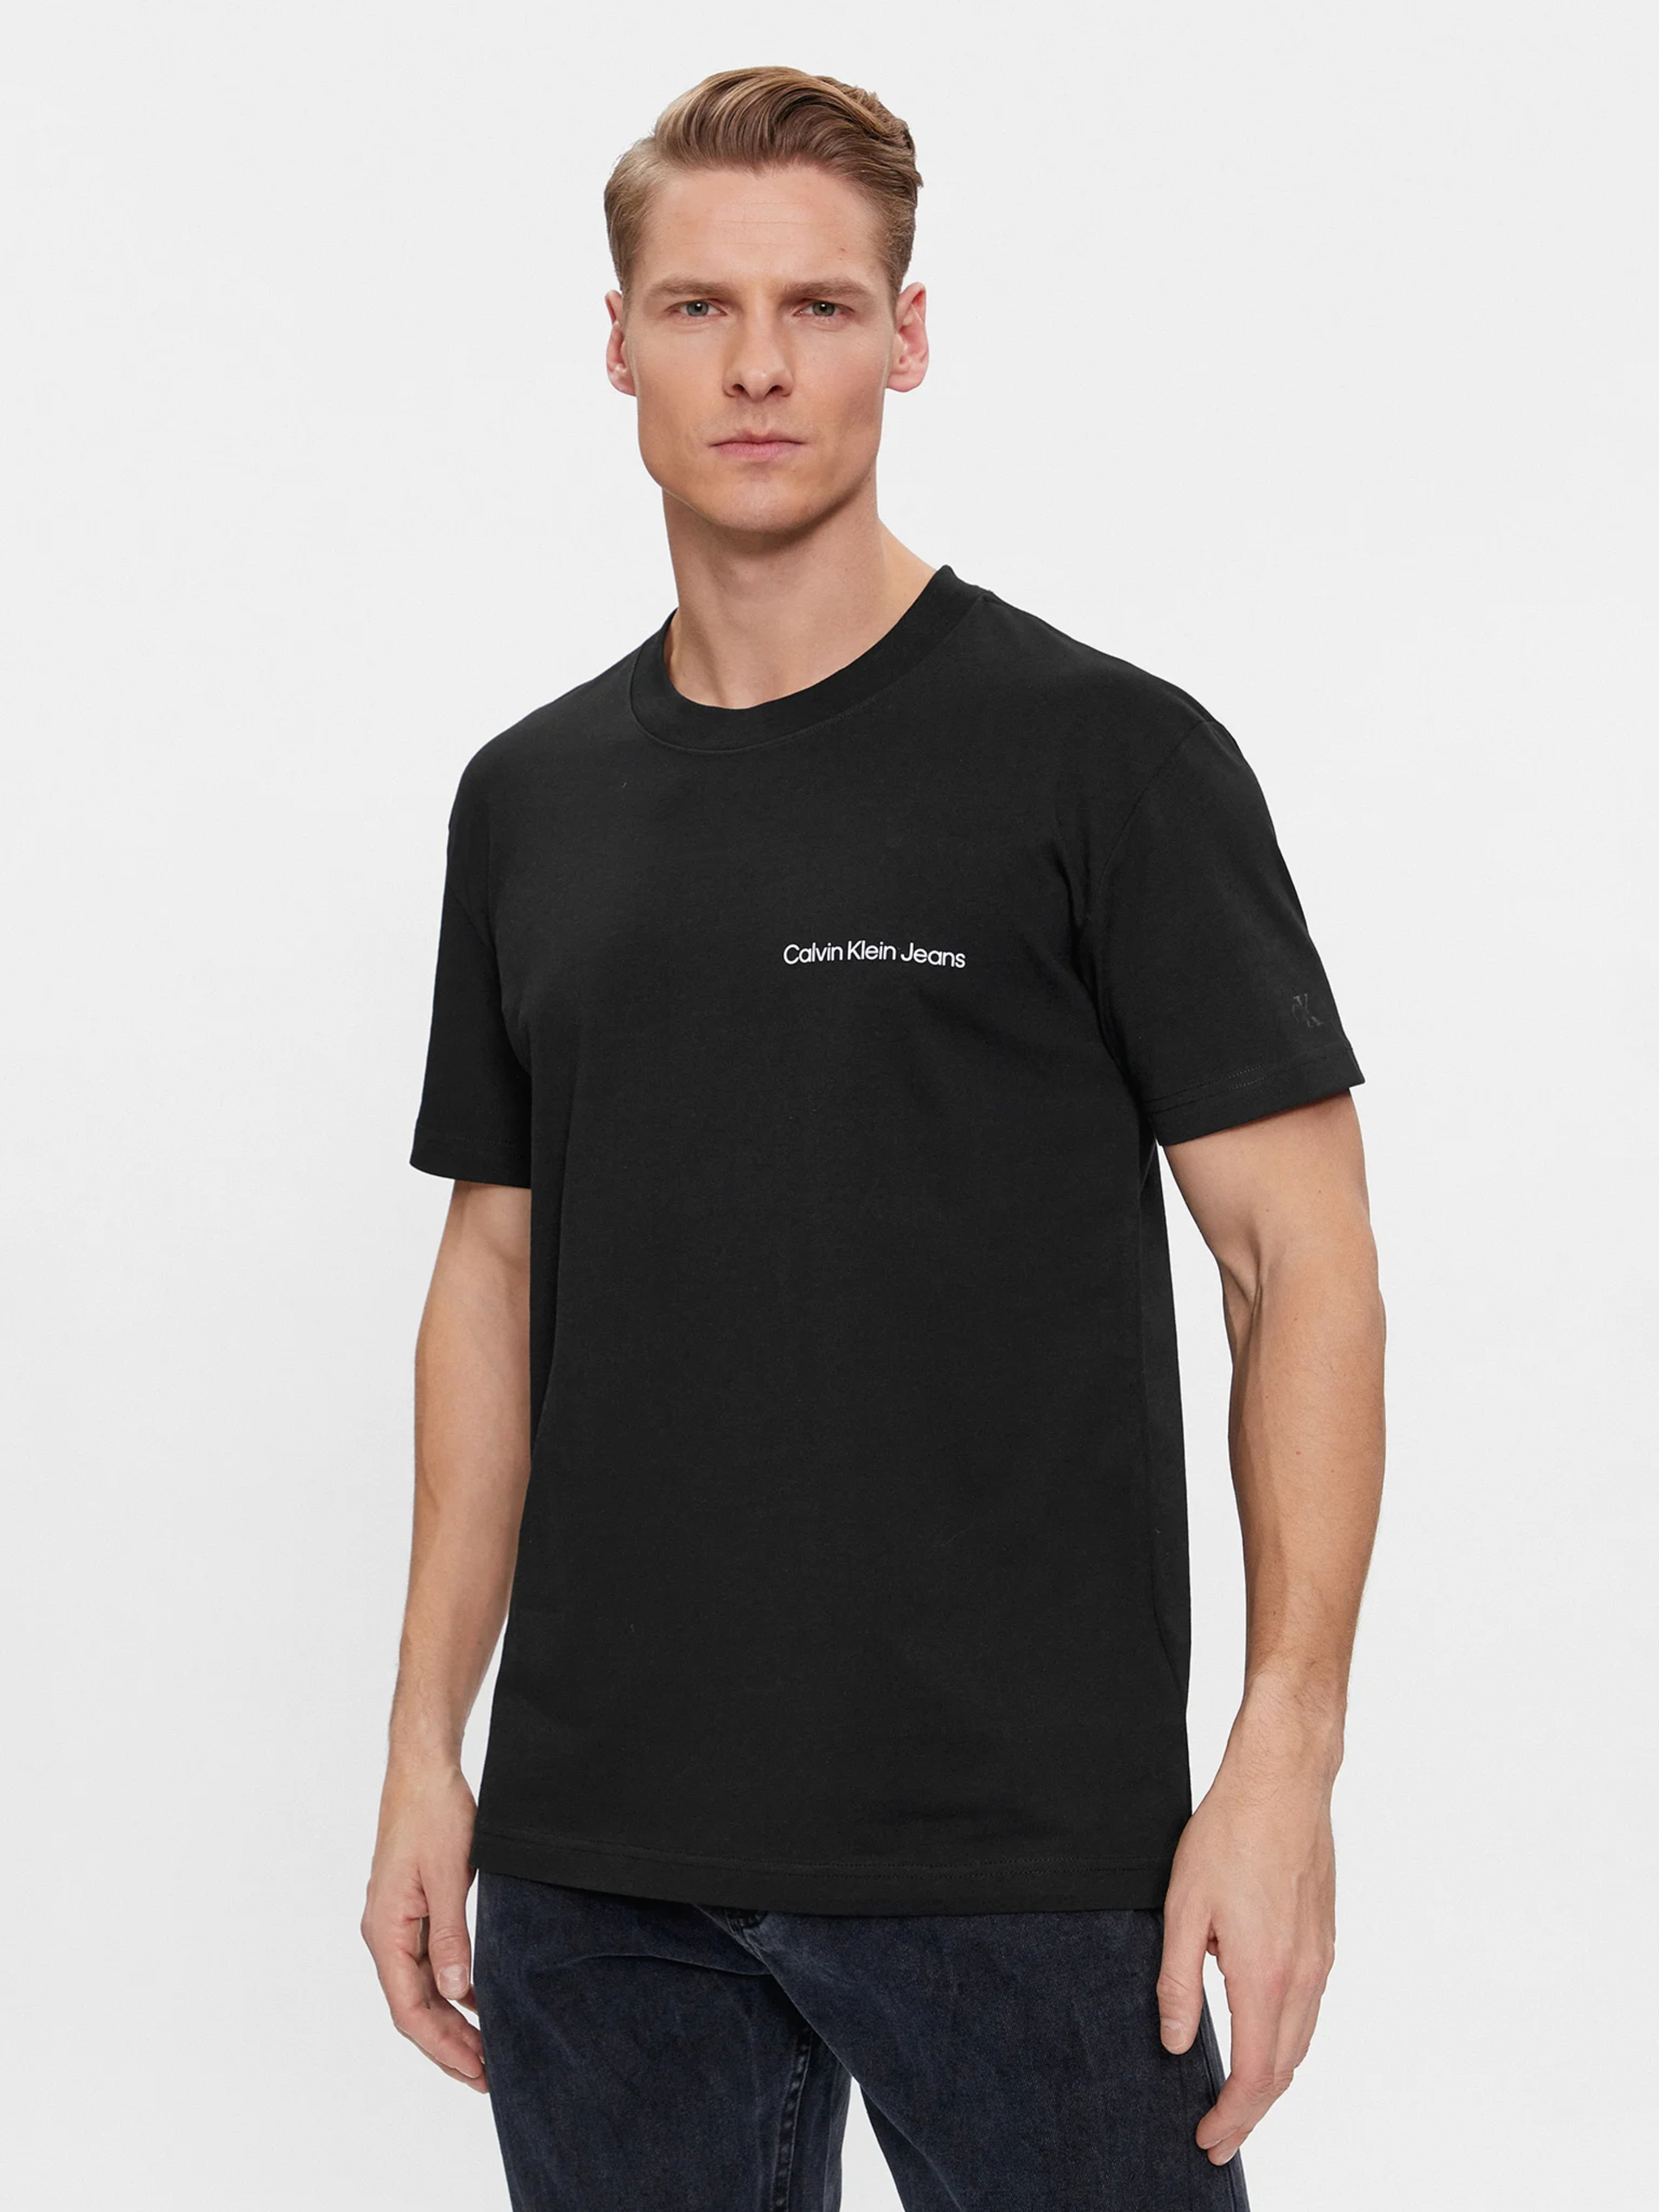 Calvin Klein pánské černé tričko - XL (BEH)